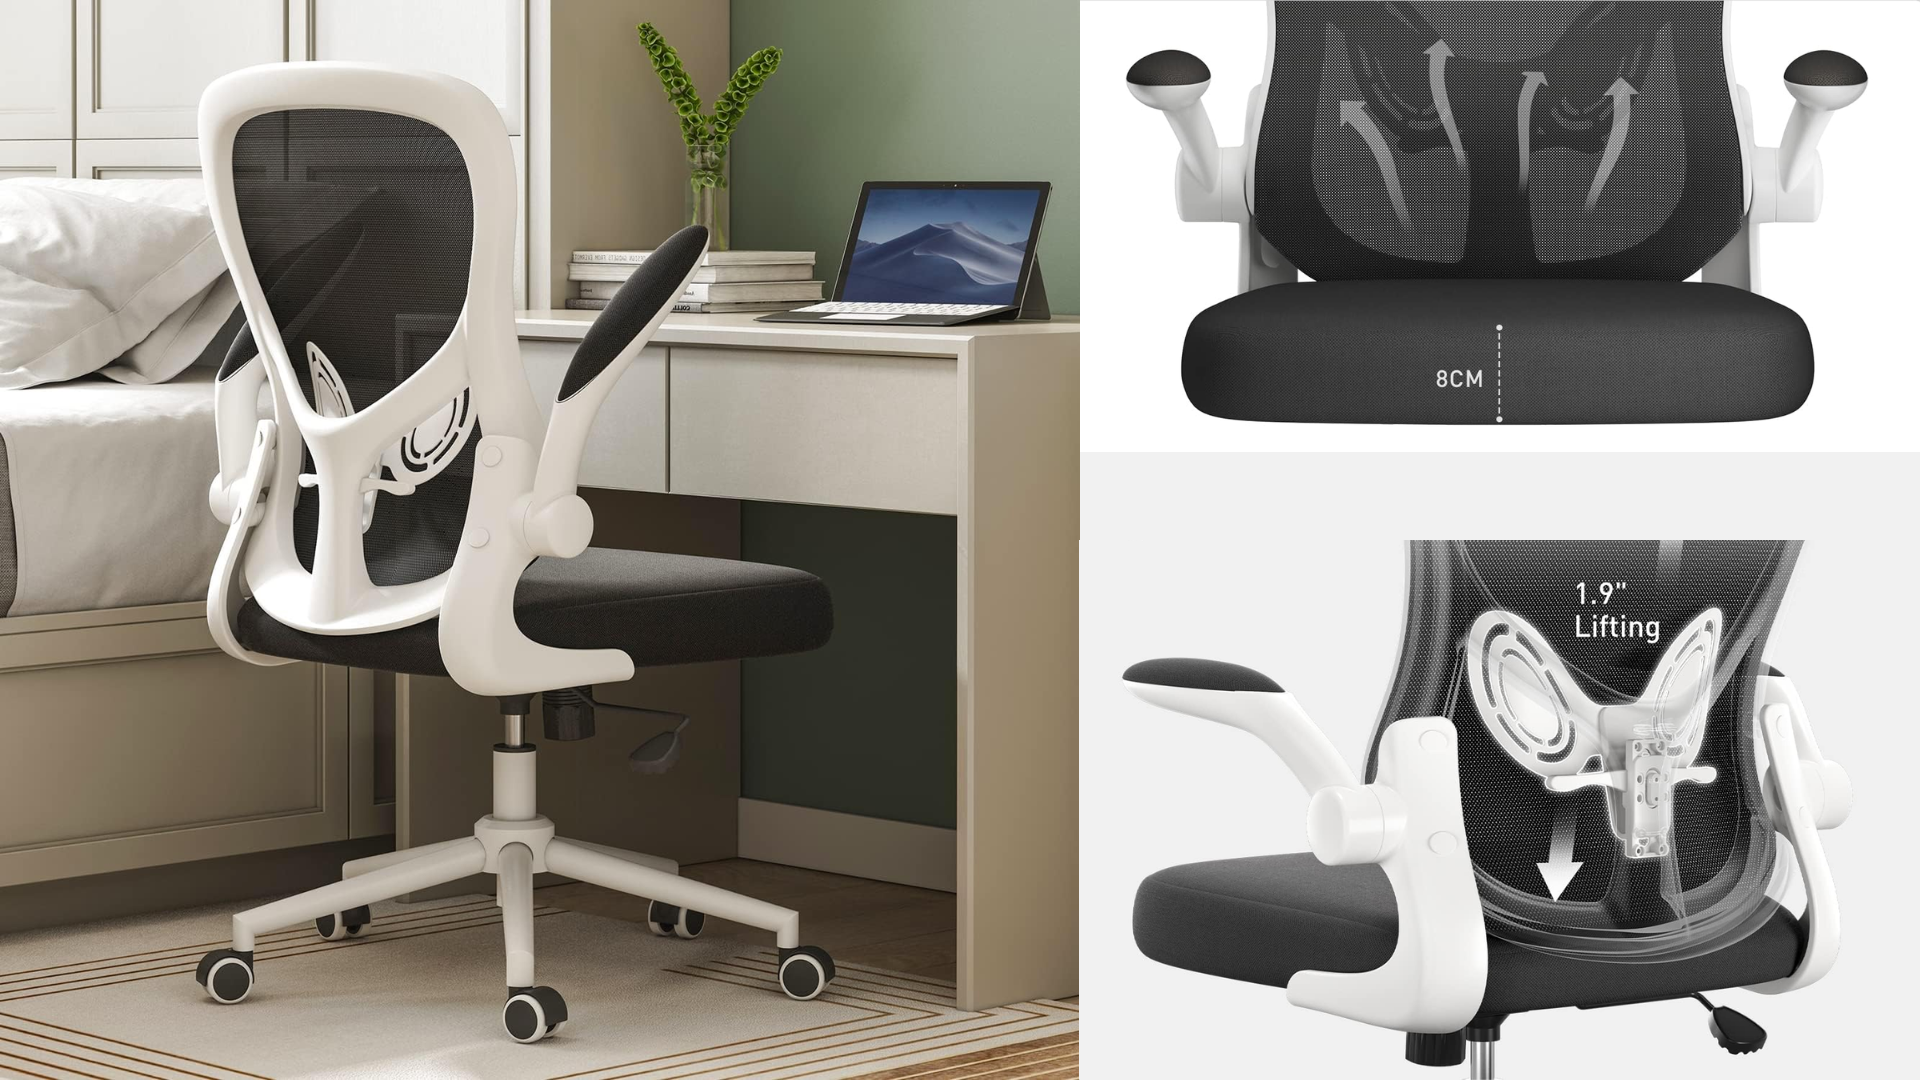 Hbada Ergonomic Desk Chair